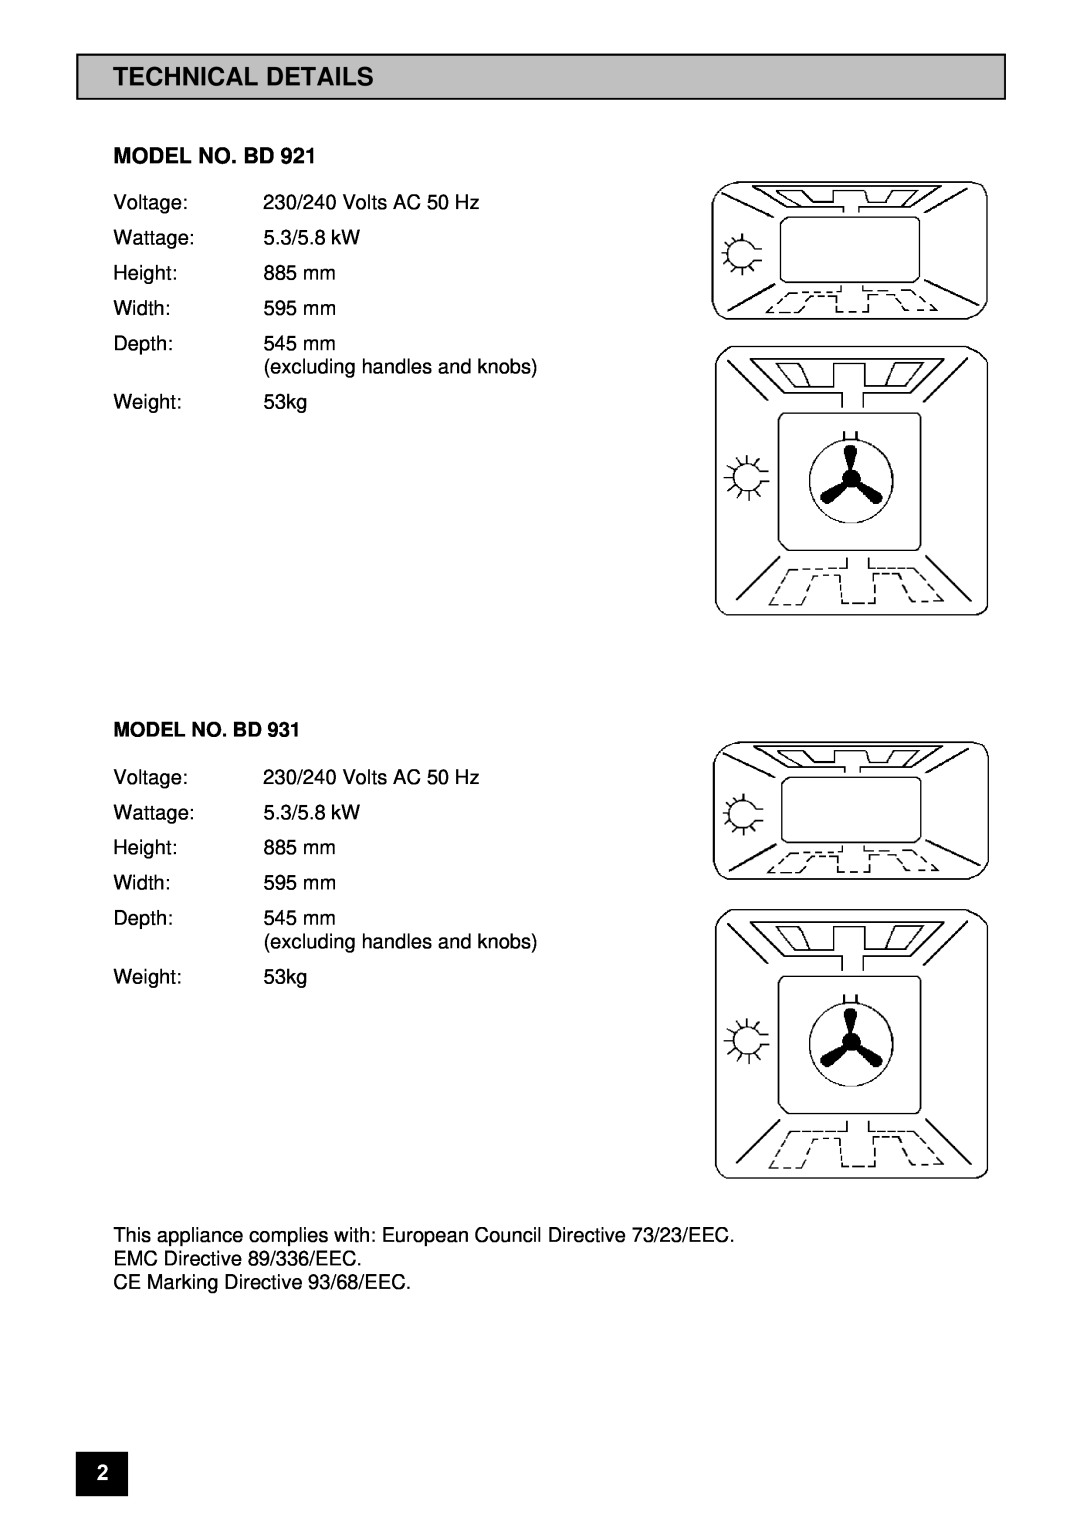 Tricity Bendix BD 921 installation instructions Technical Details, Model No. Bd 